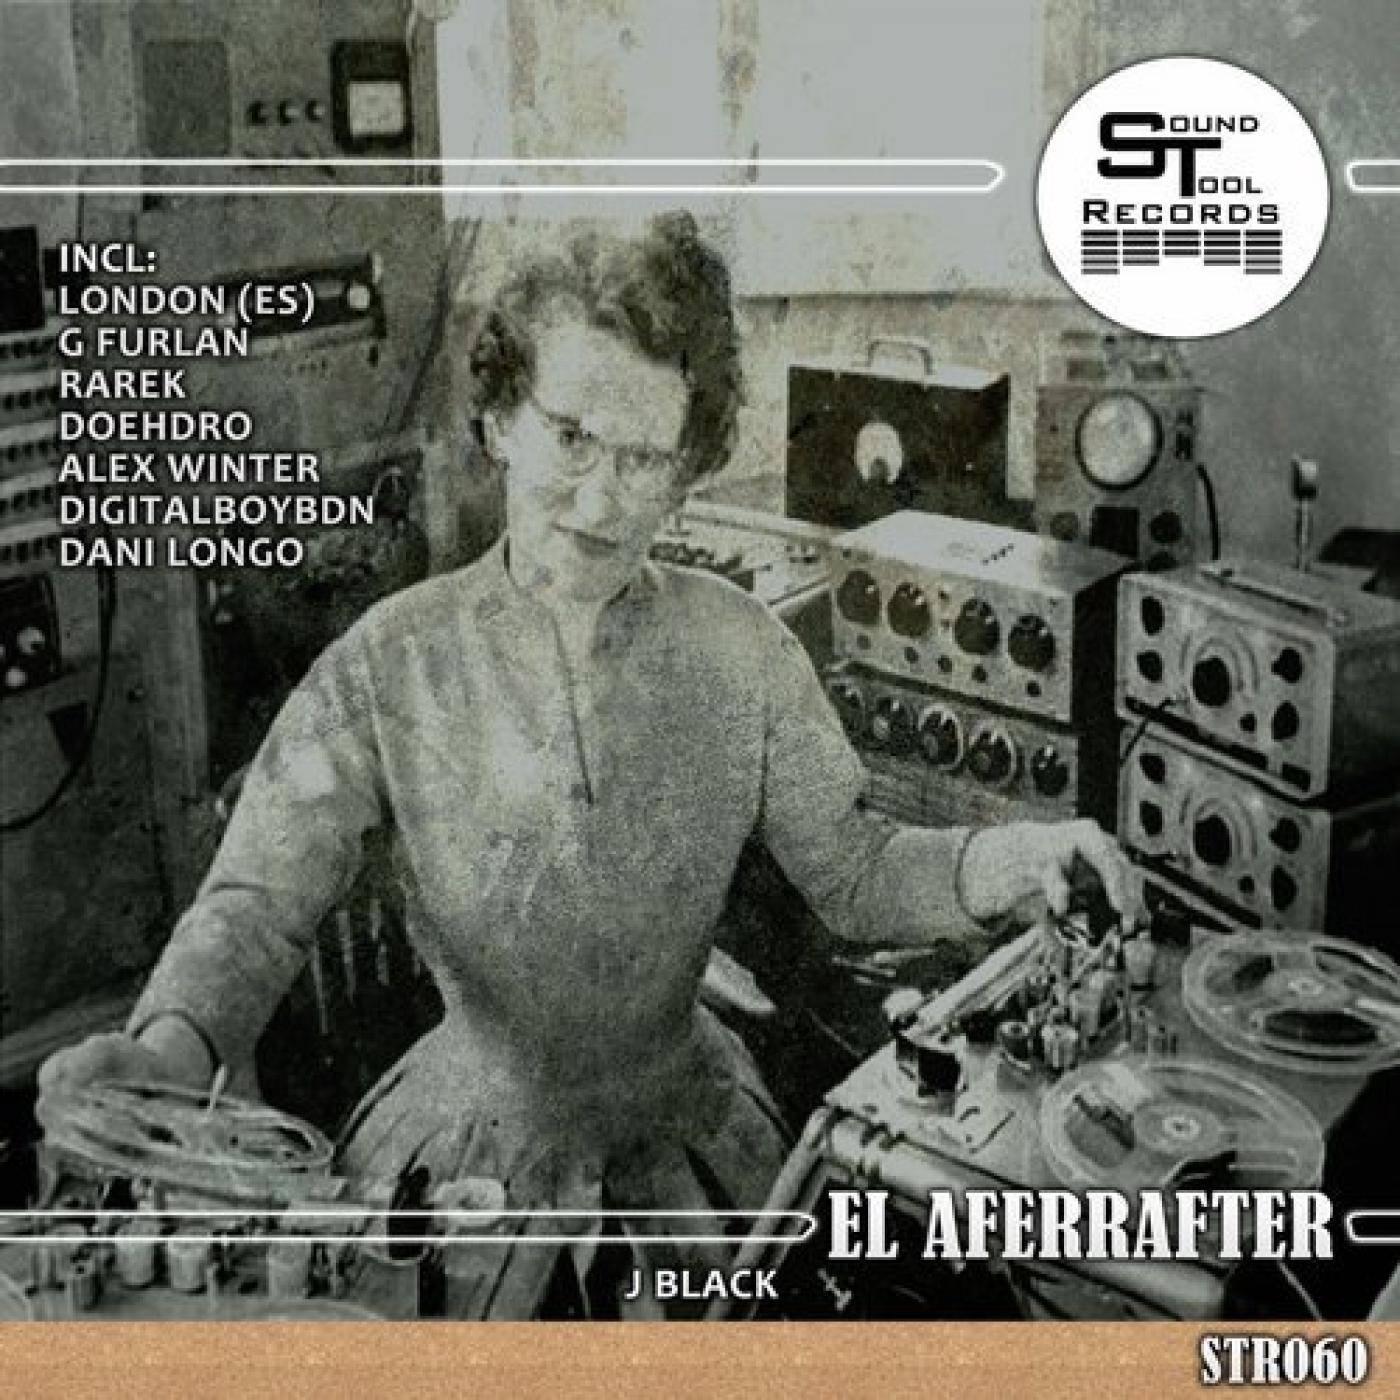 El Aferrafter (DigitalboyBdn Remix)